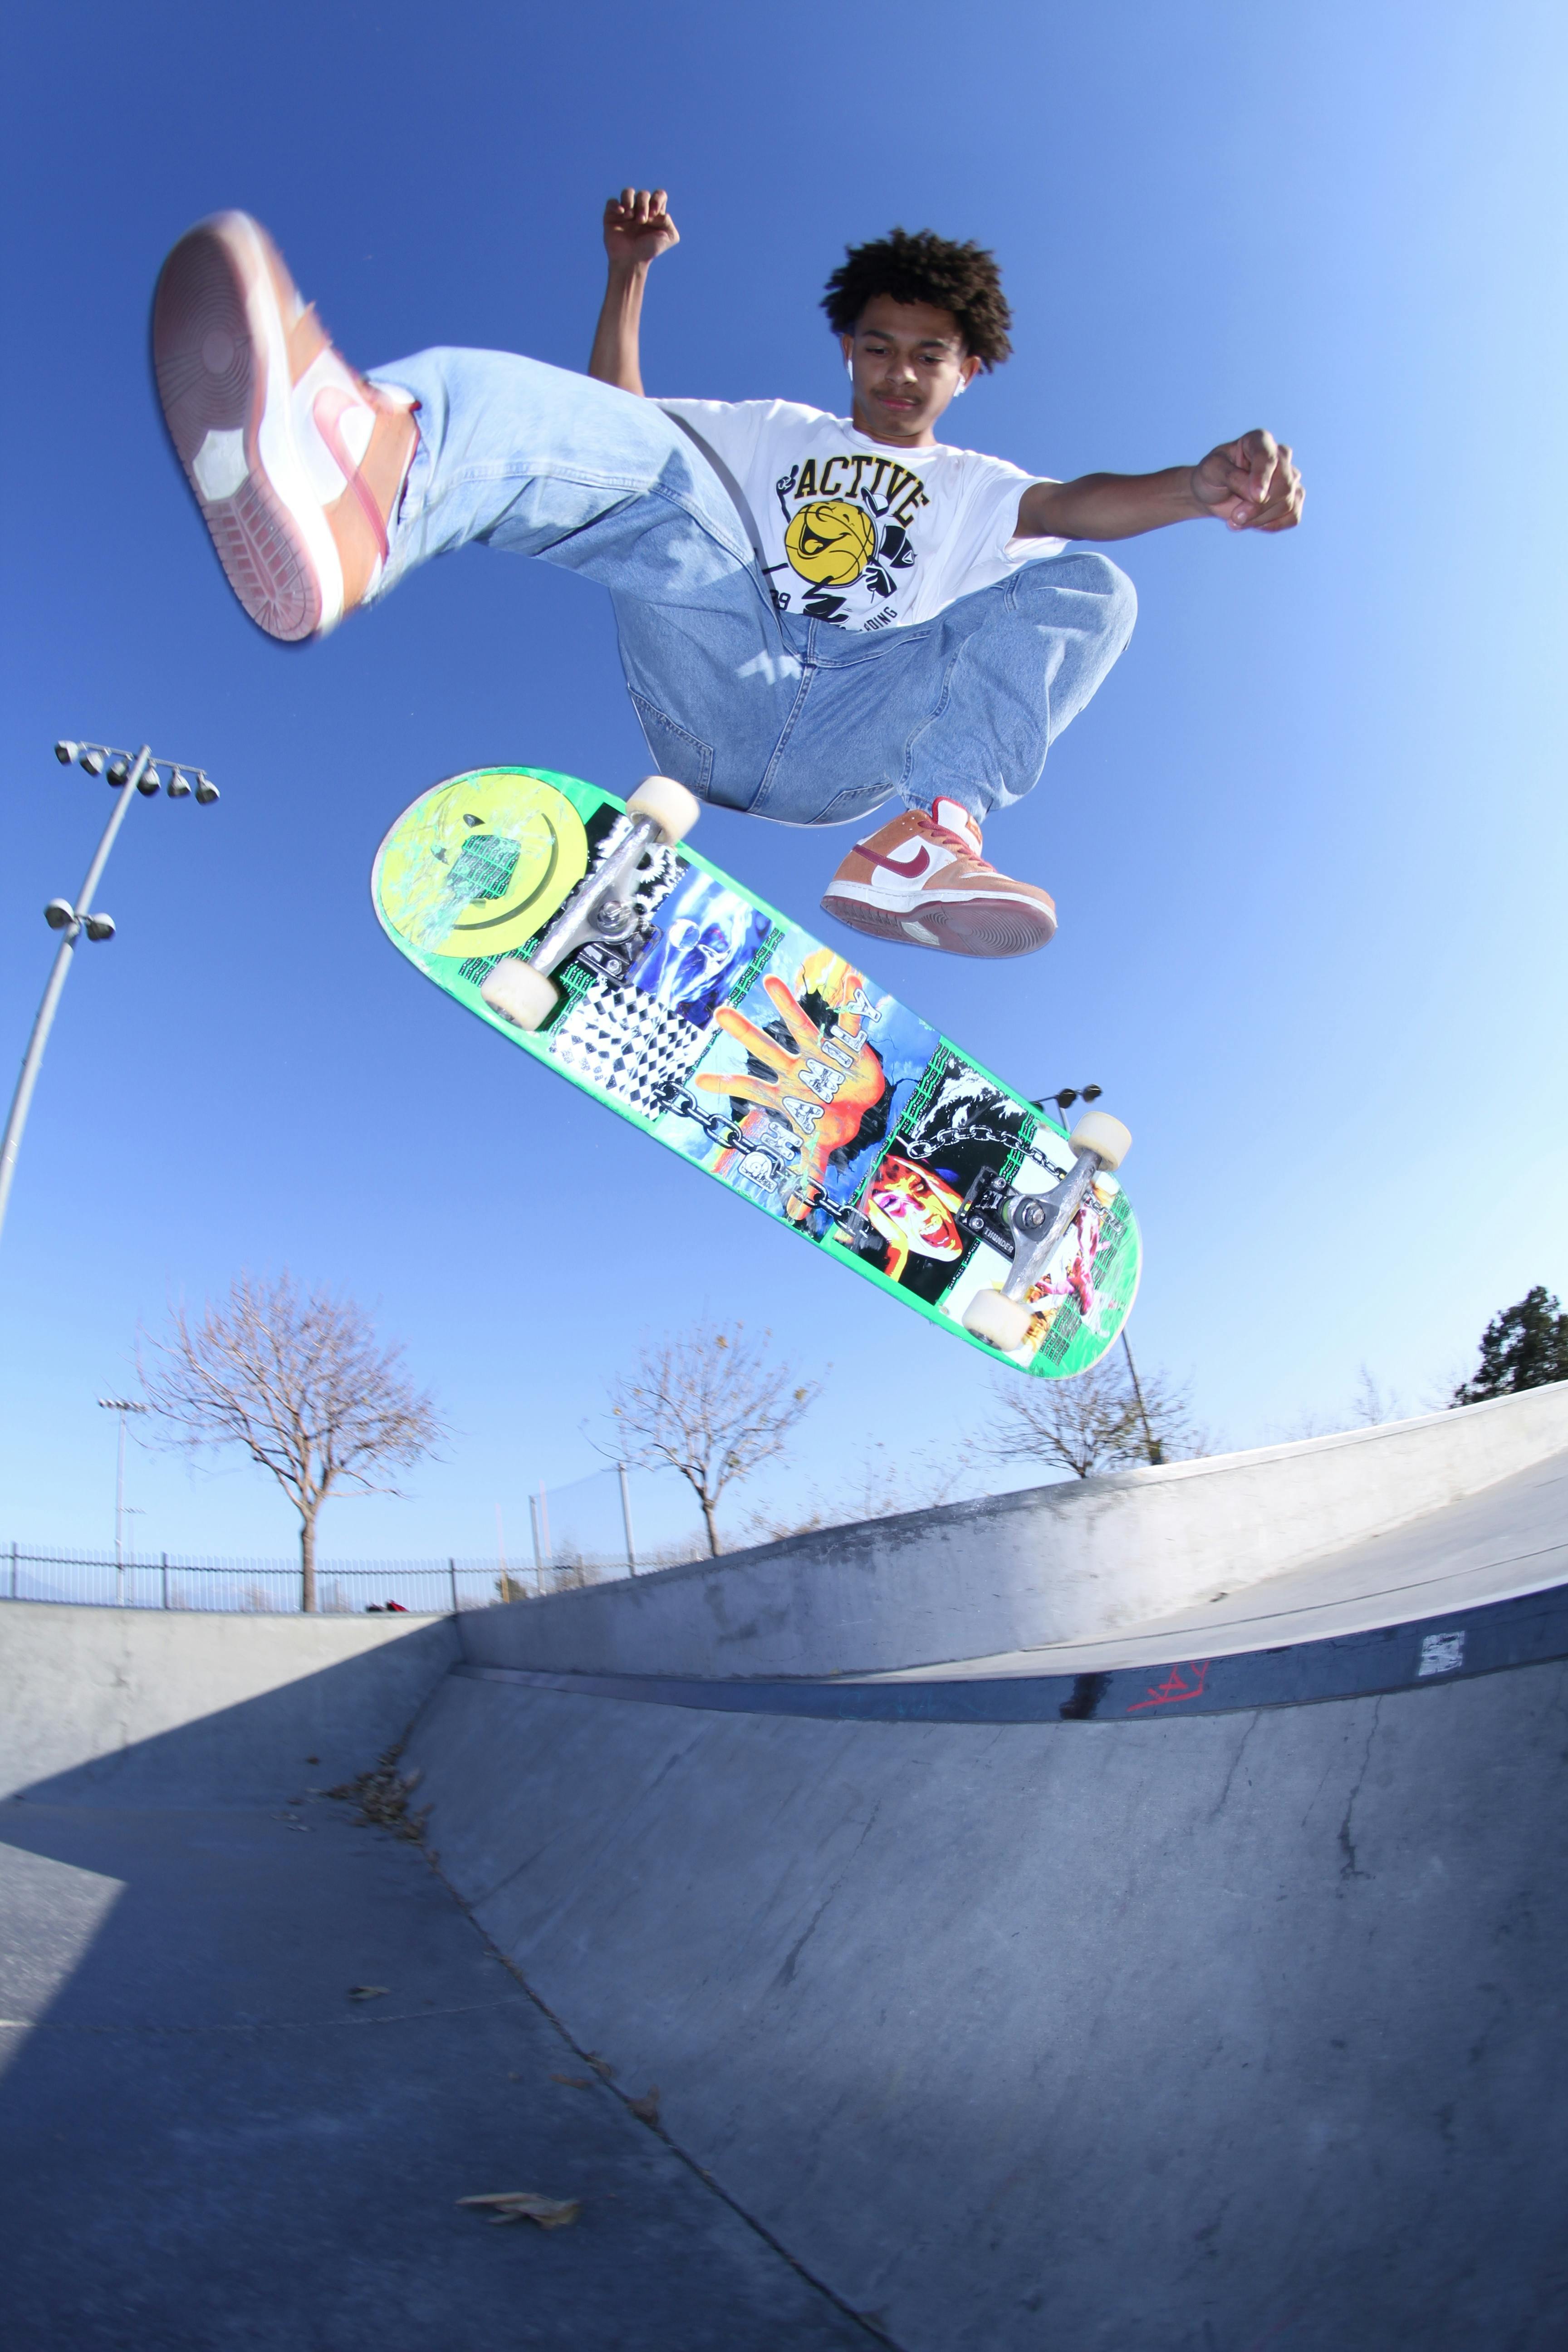 Indringing Uitdaging Tot stand brengen Cool black teenager doing skateboard trick · Free Stock Photo